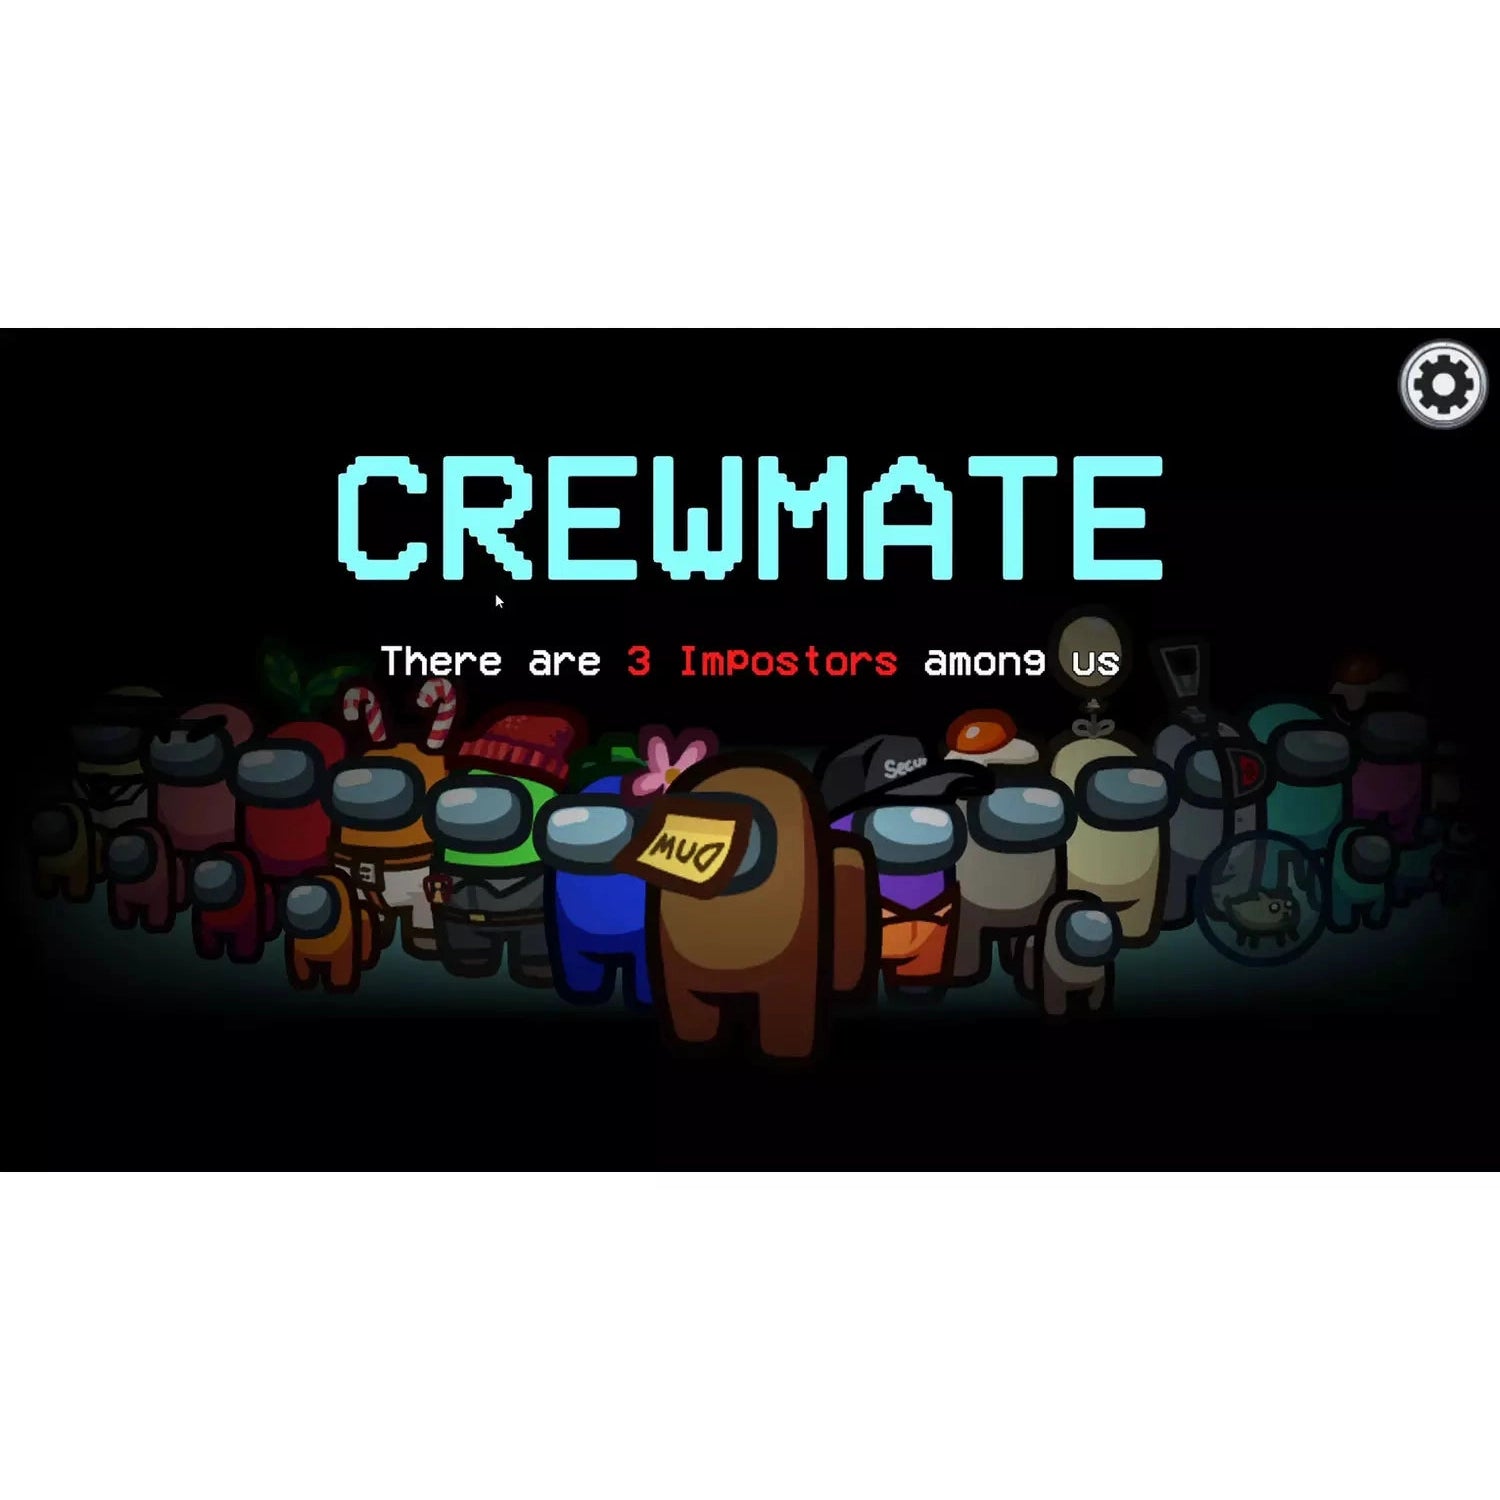 Among Us: Crewmate Edition (PS4)